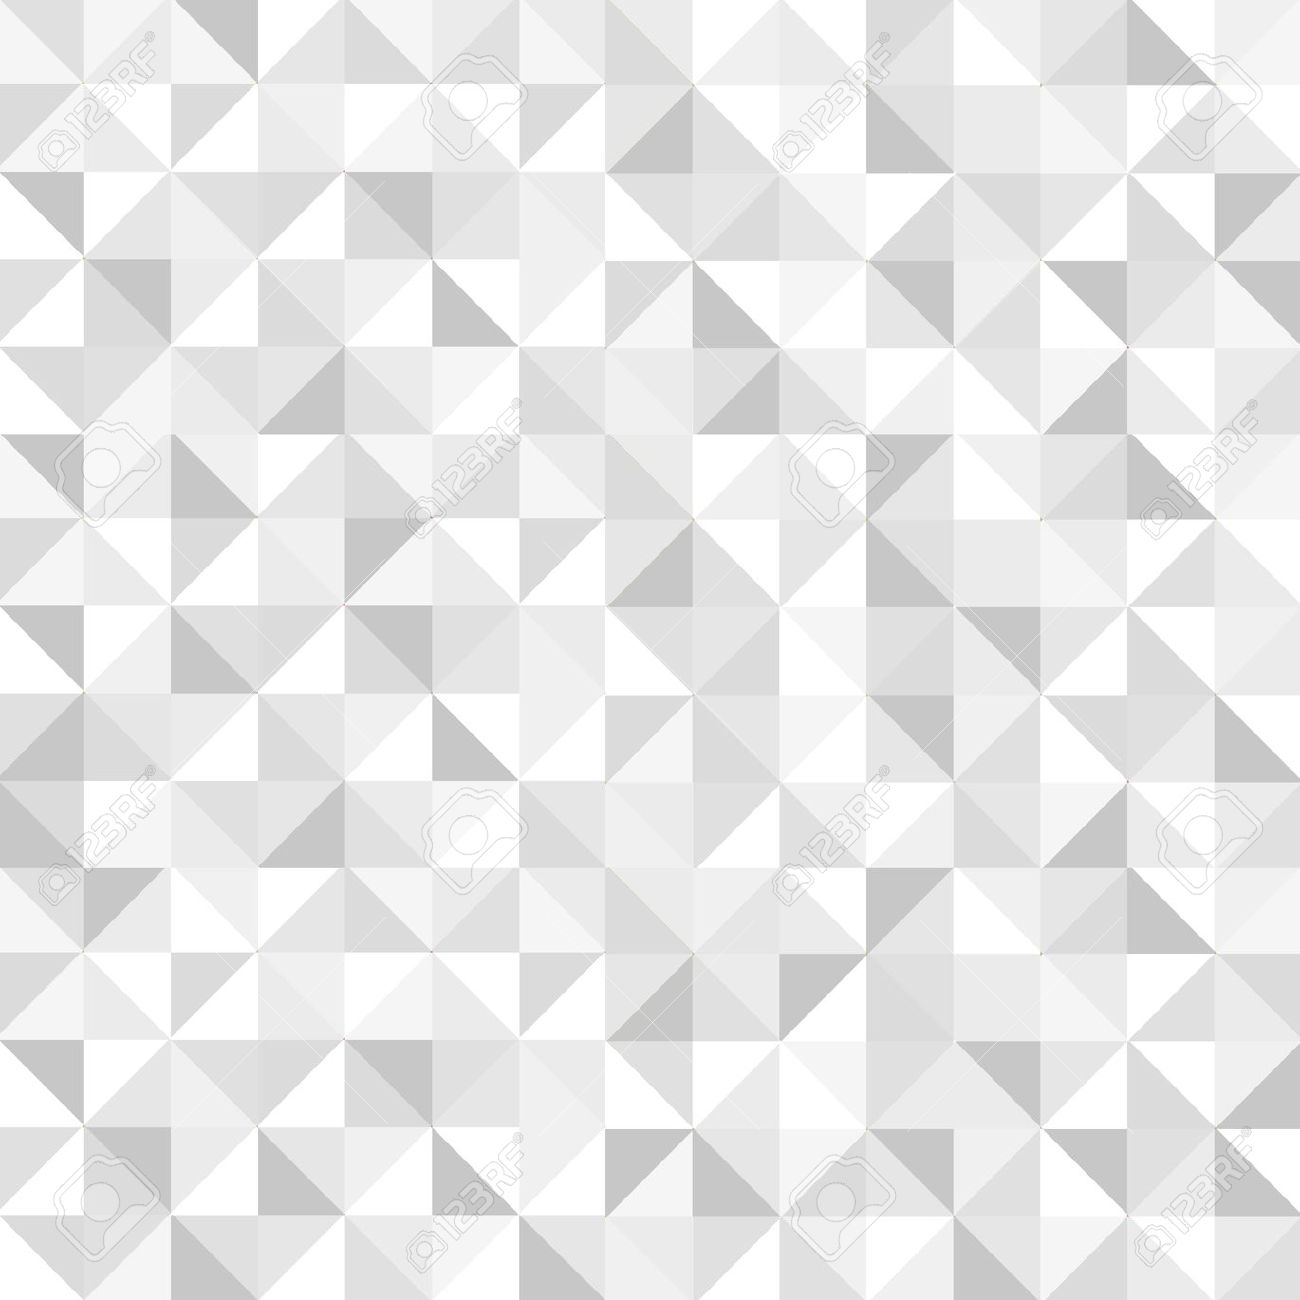 FunMozar Geometric Triangle Wallpapers 1300x1300